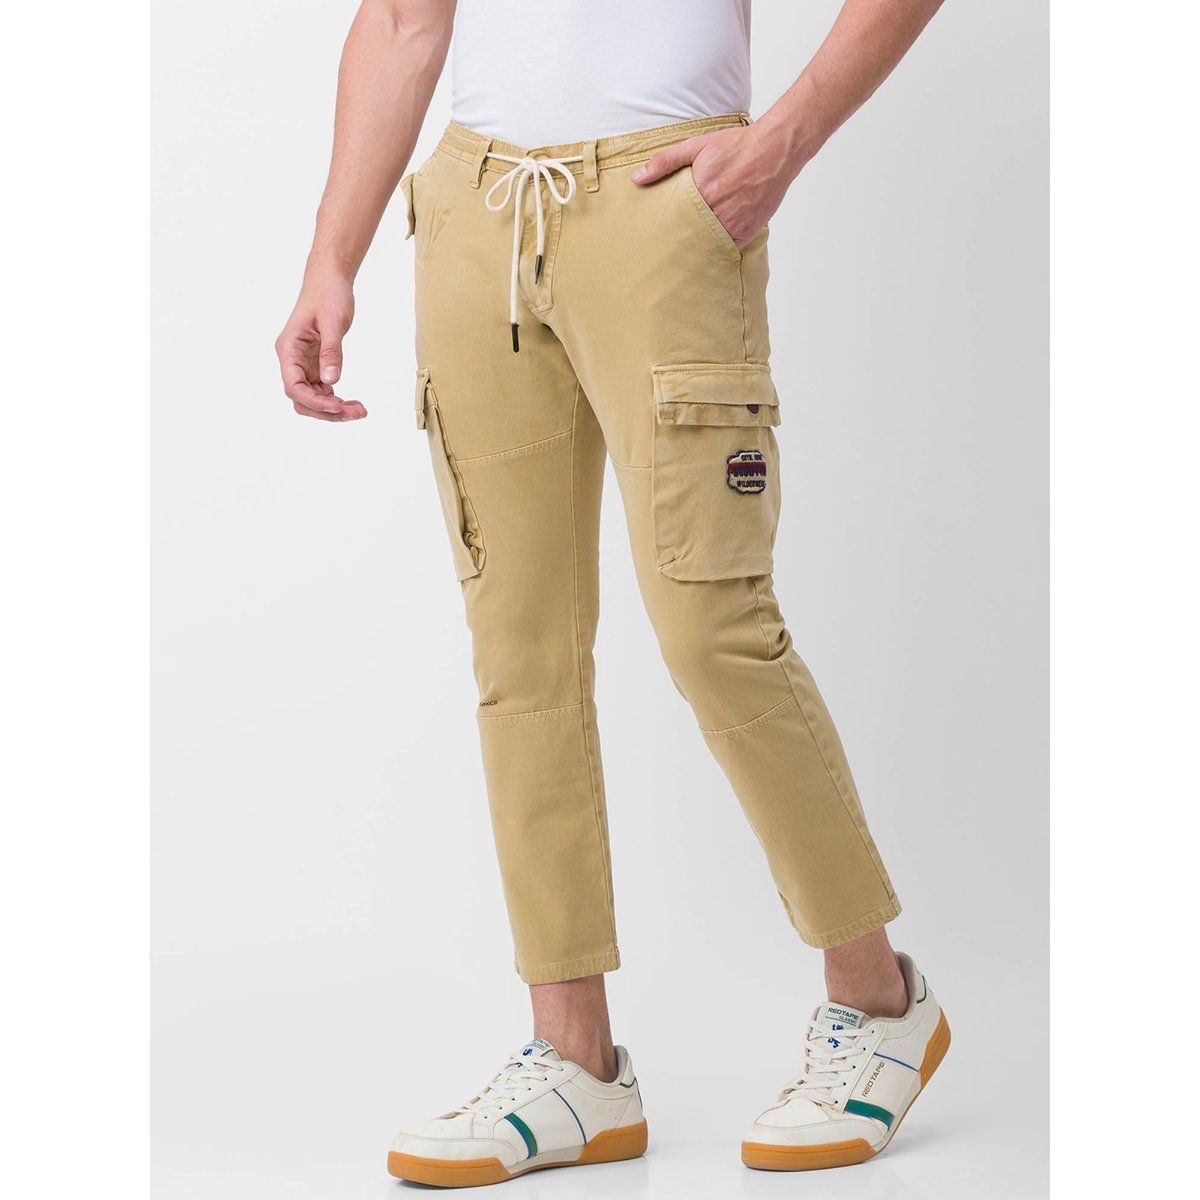 spykar - Men's Grey Cotton Solid Trousers